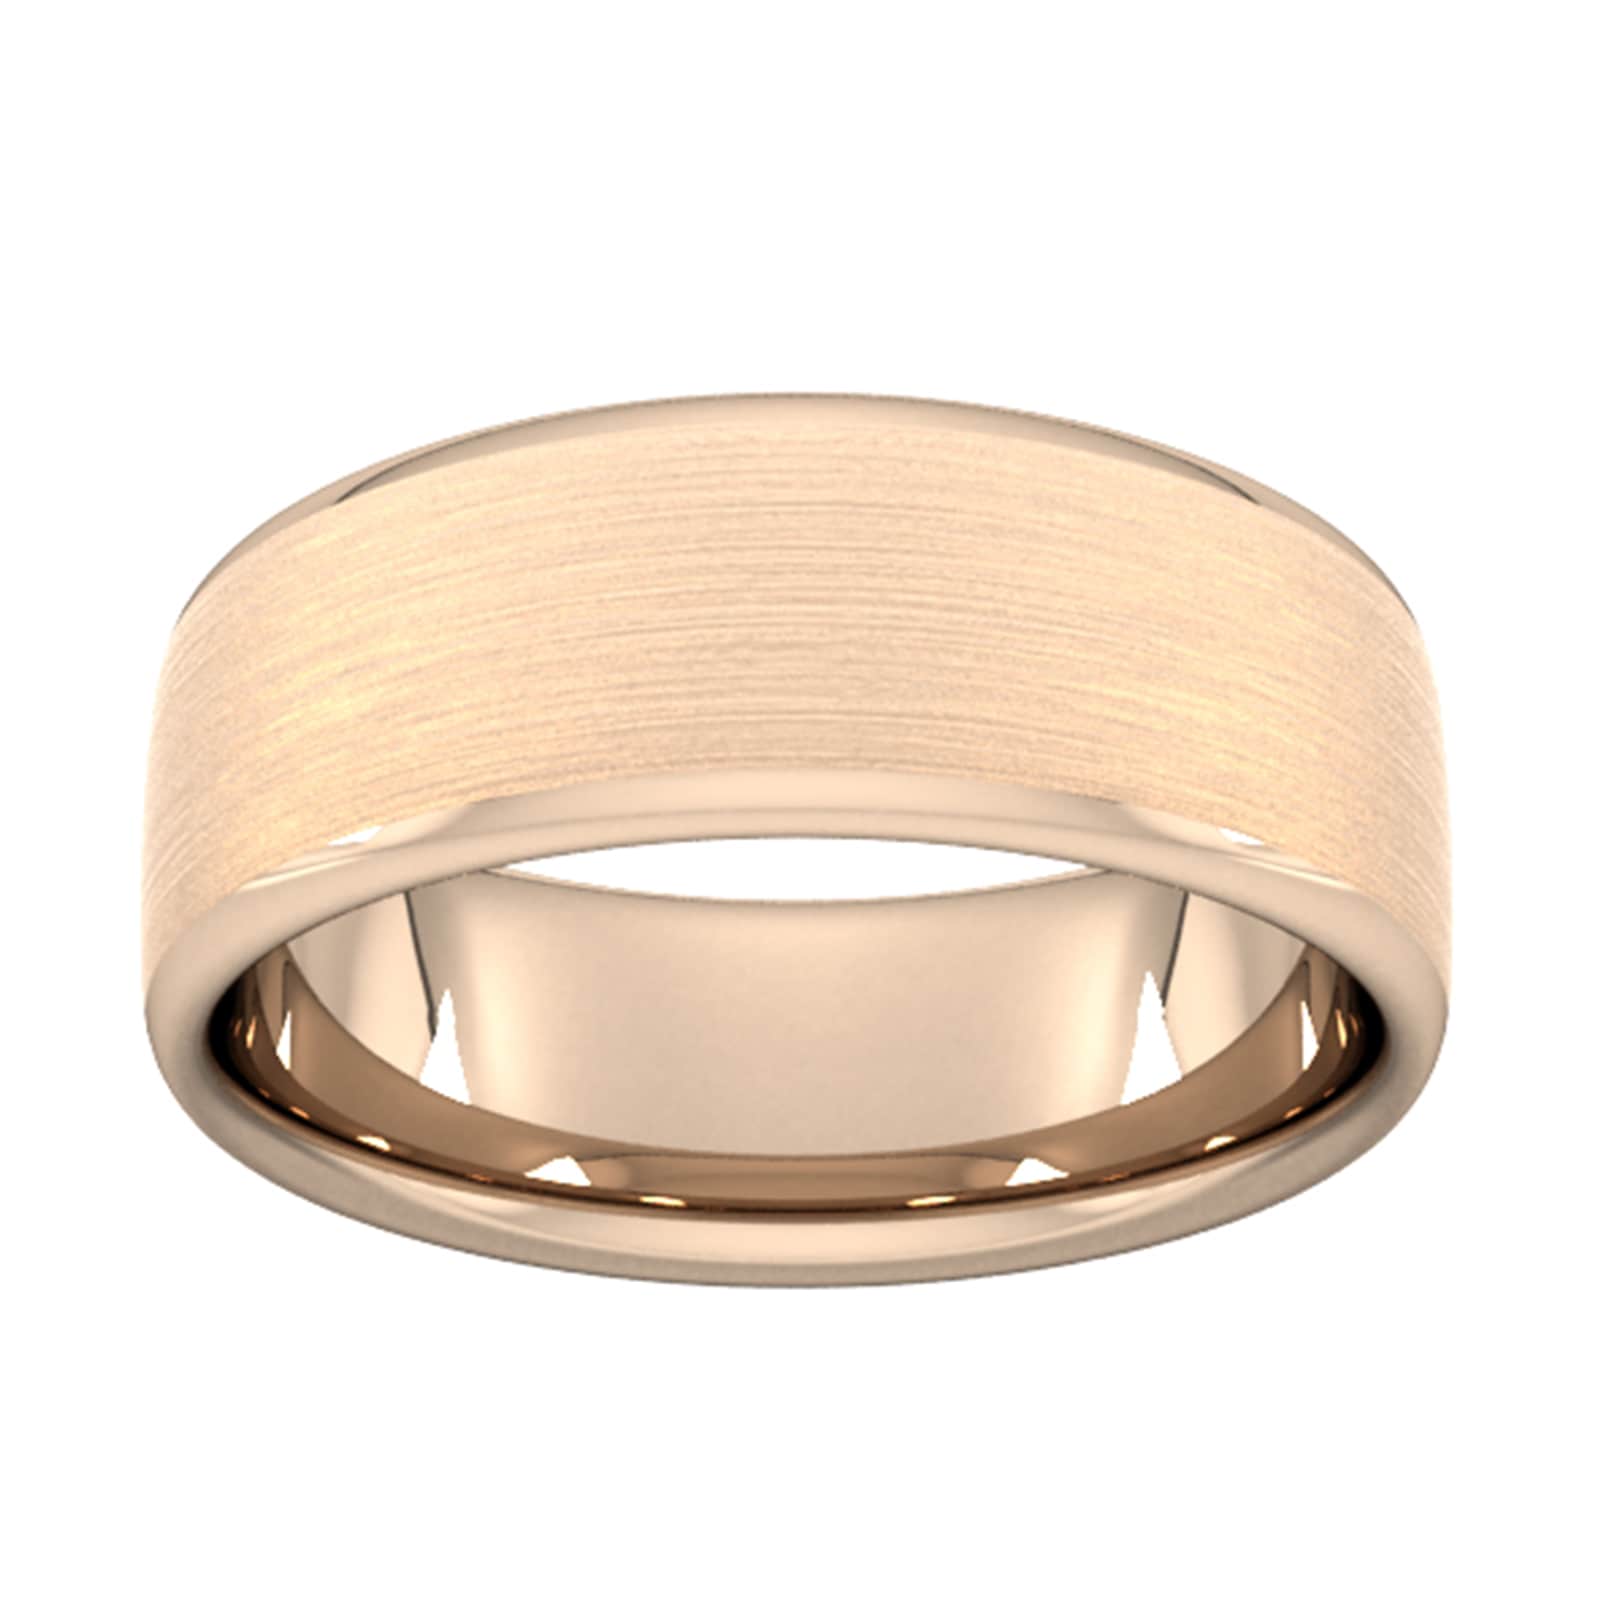 8mm Slight Court Heavy Matt Finished Wedding Ring In 9 Carat Rose Gold - Ring Size X